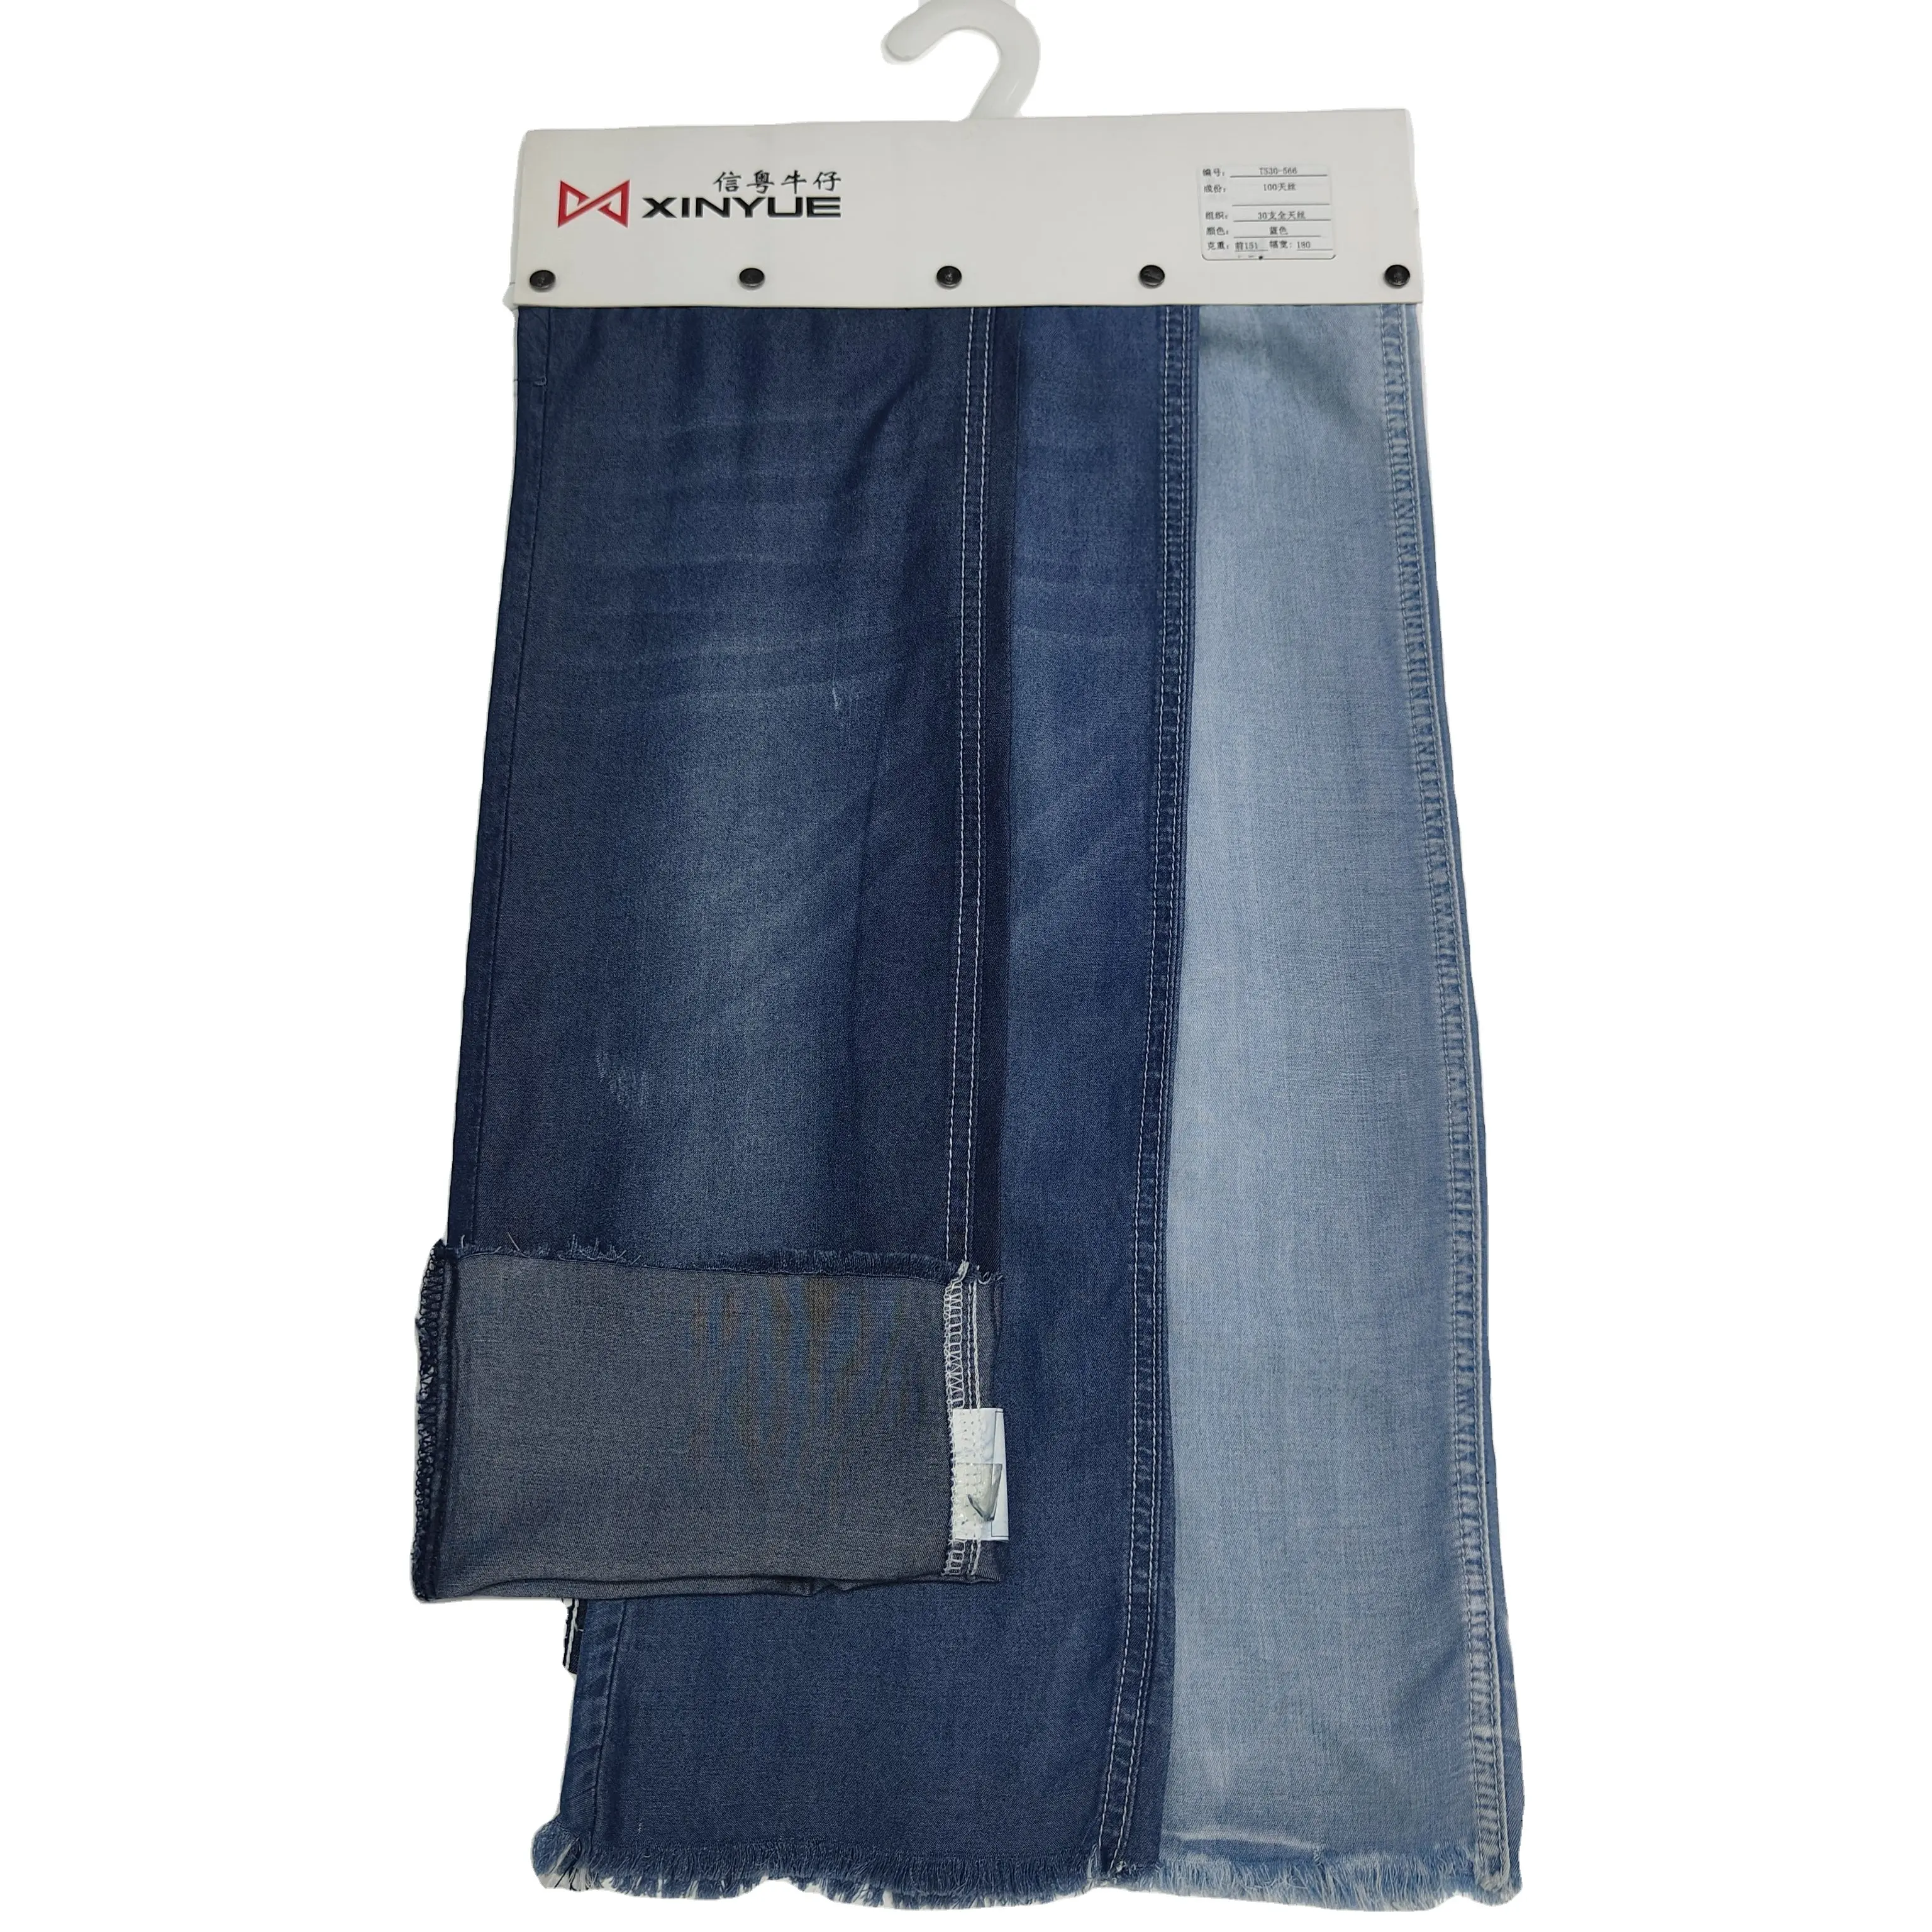 Bán buôn Slub Twill denim quần áo chất liệu polyester cotton spandex thời trang Stretch Jeans vải